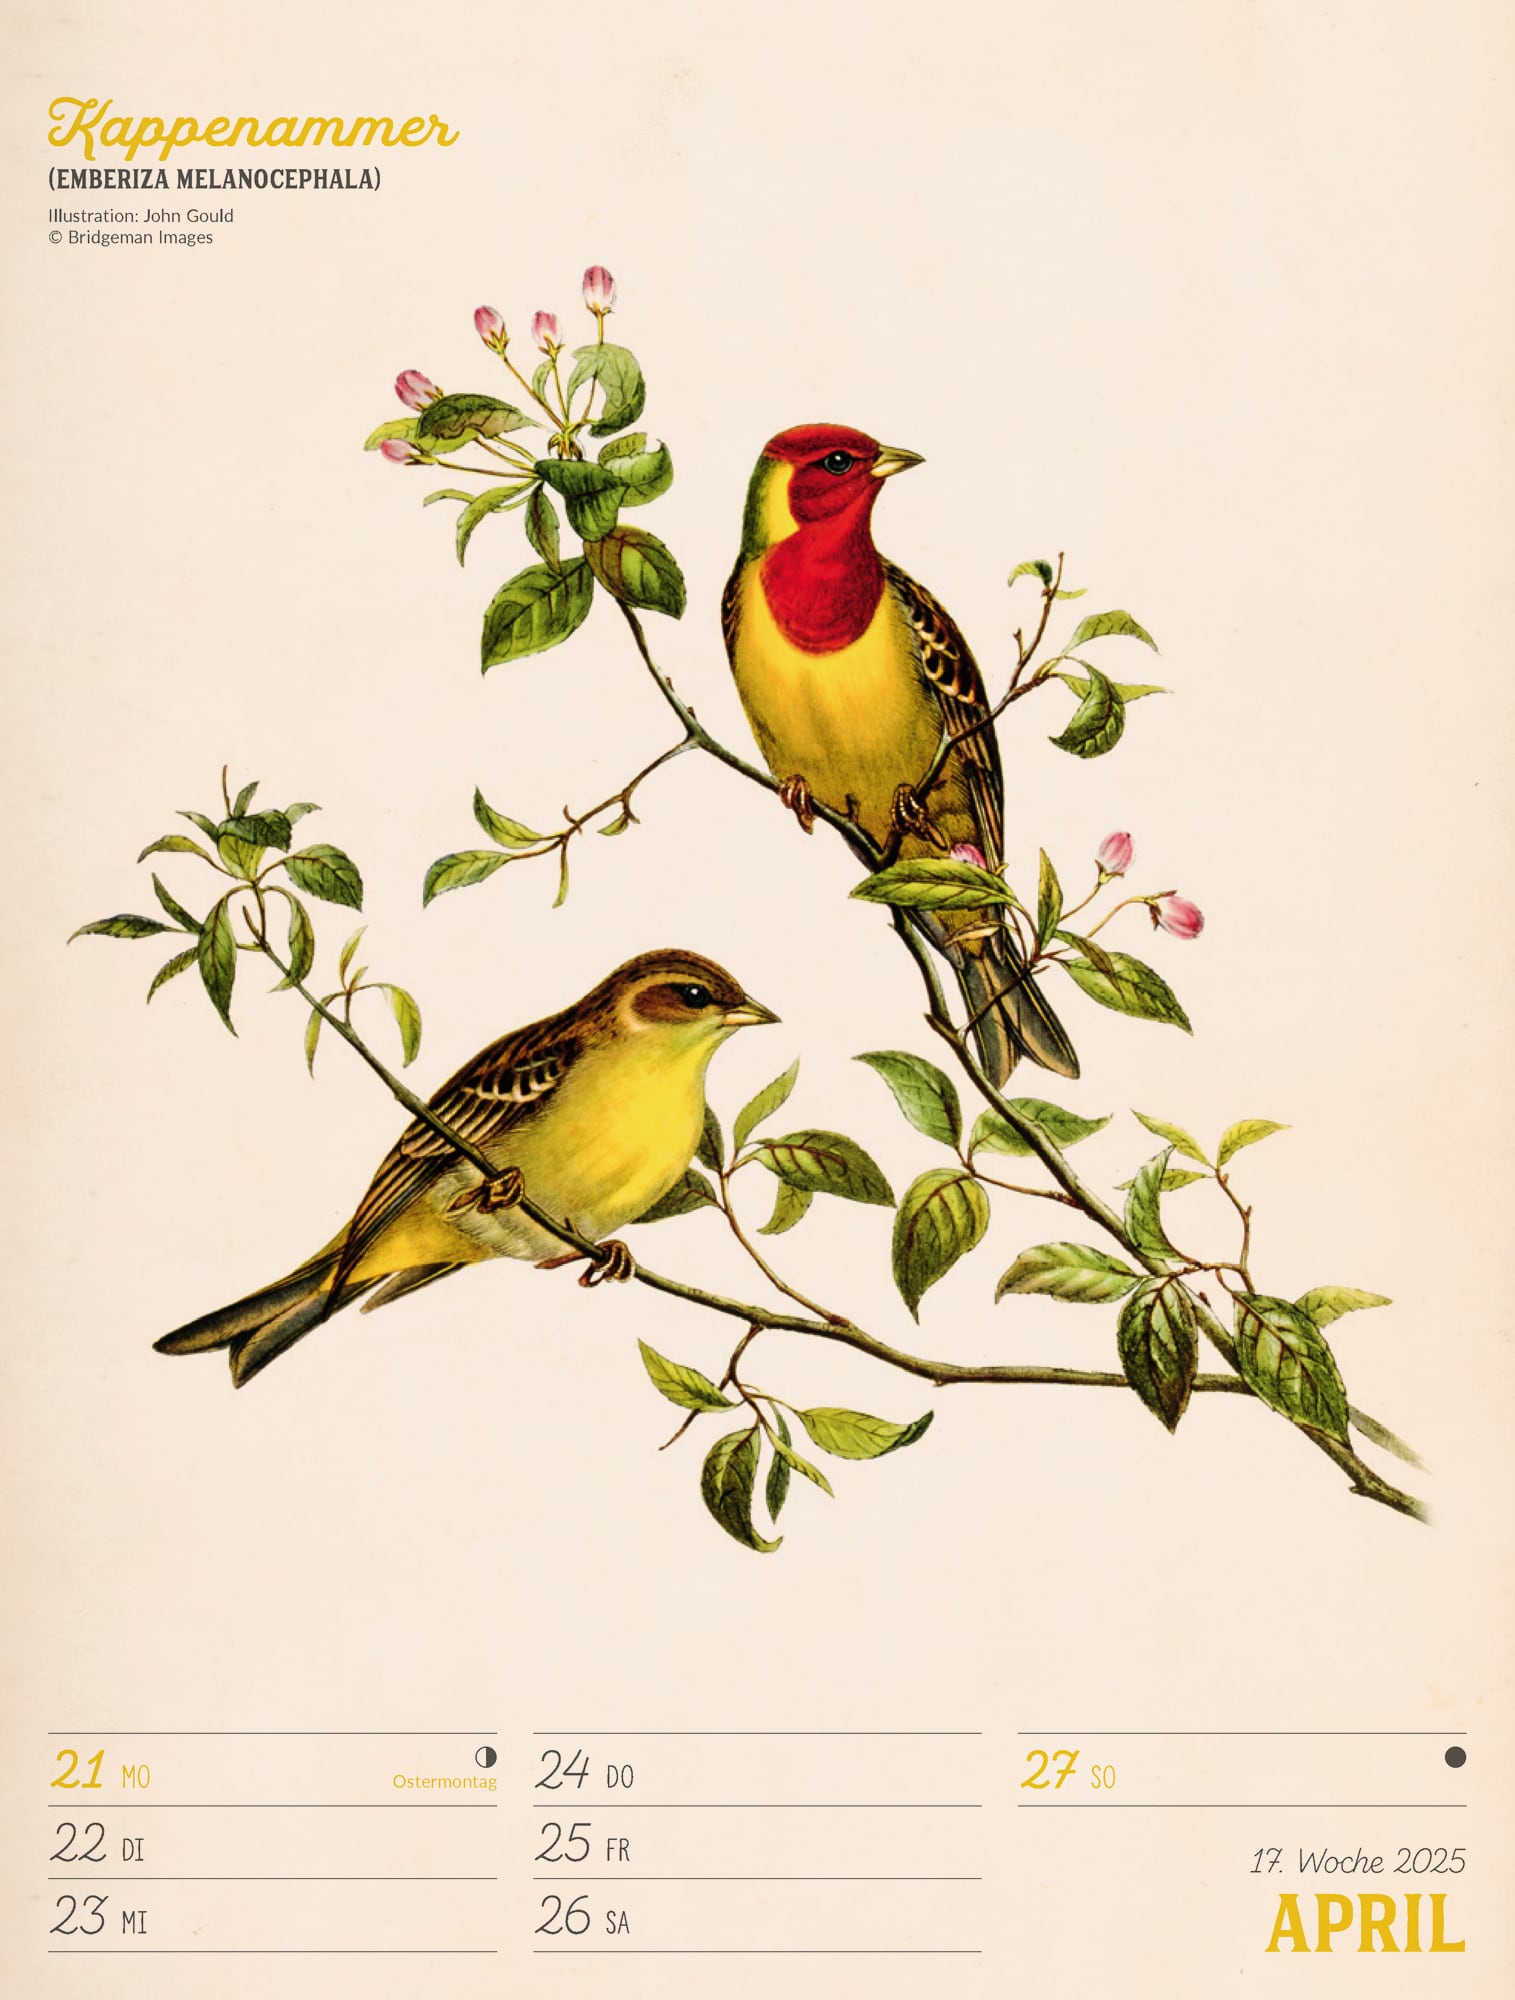 Ackermann Calendar The wonderful World of Birds 2025 - Weekly Planner - Inside View 20